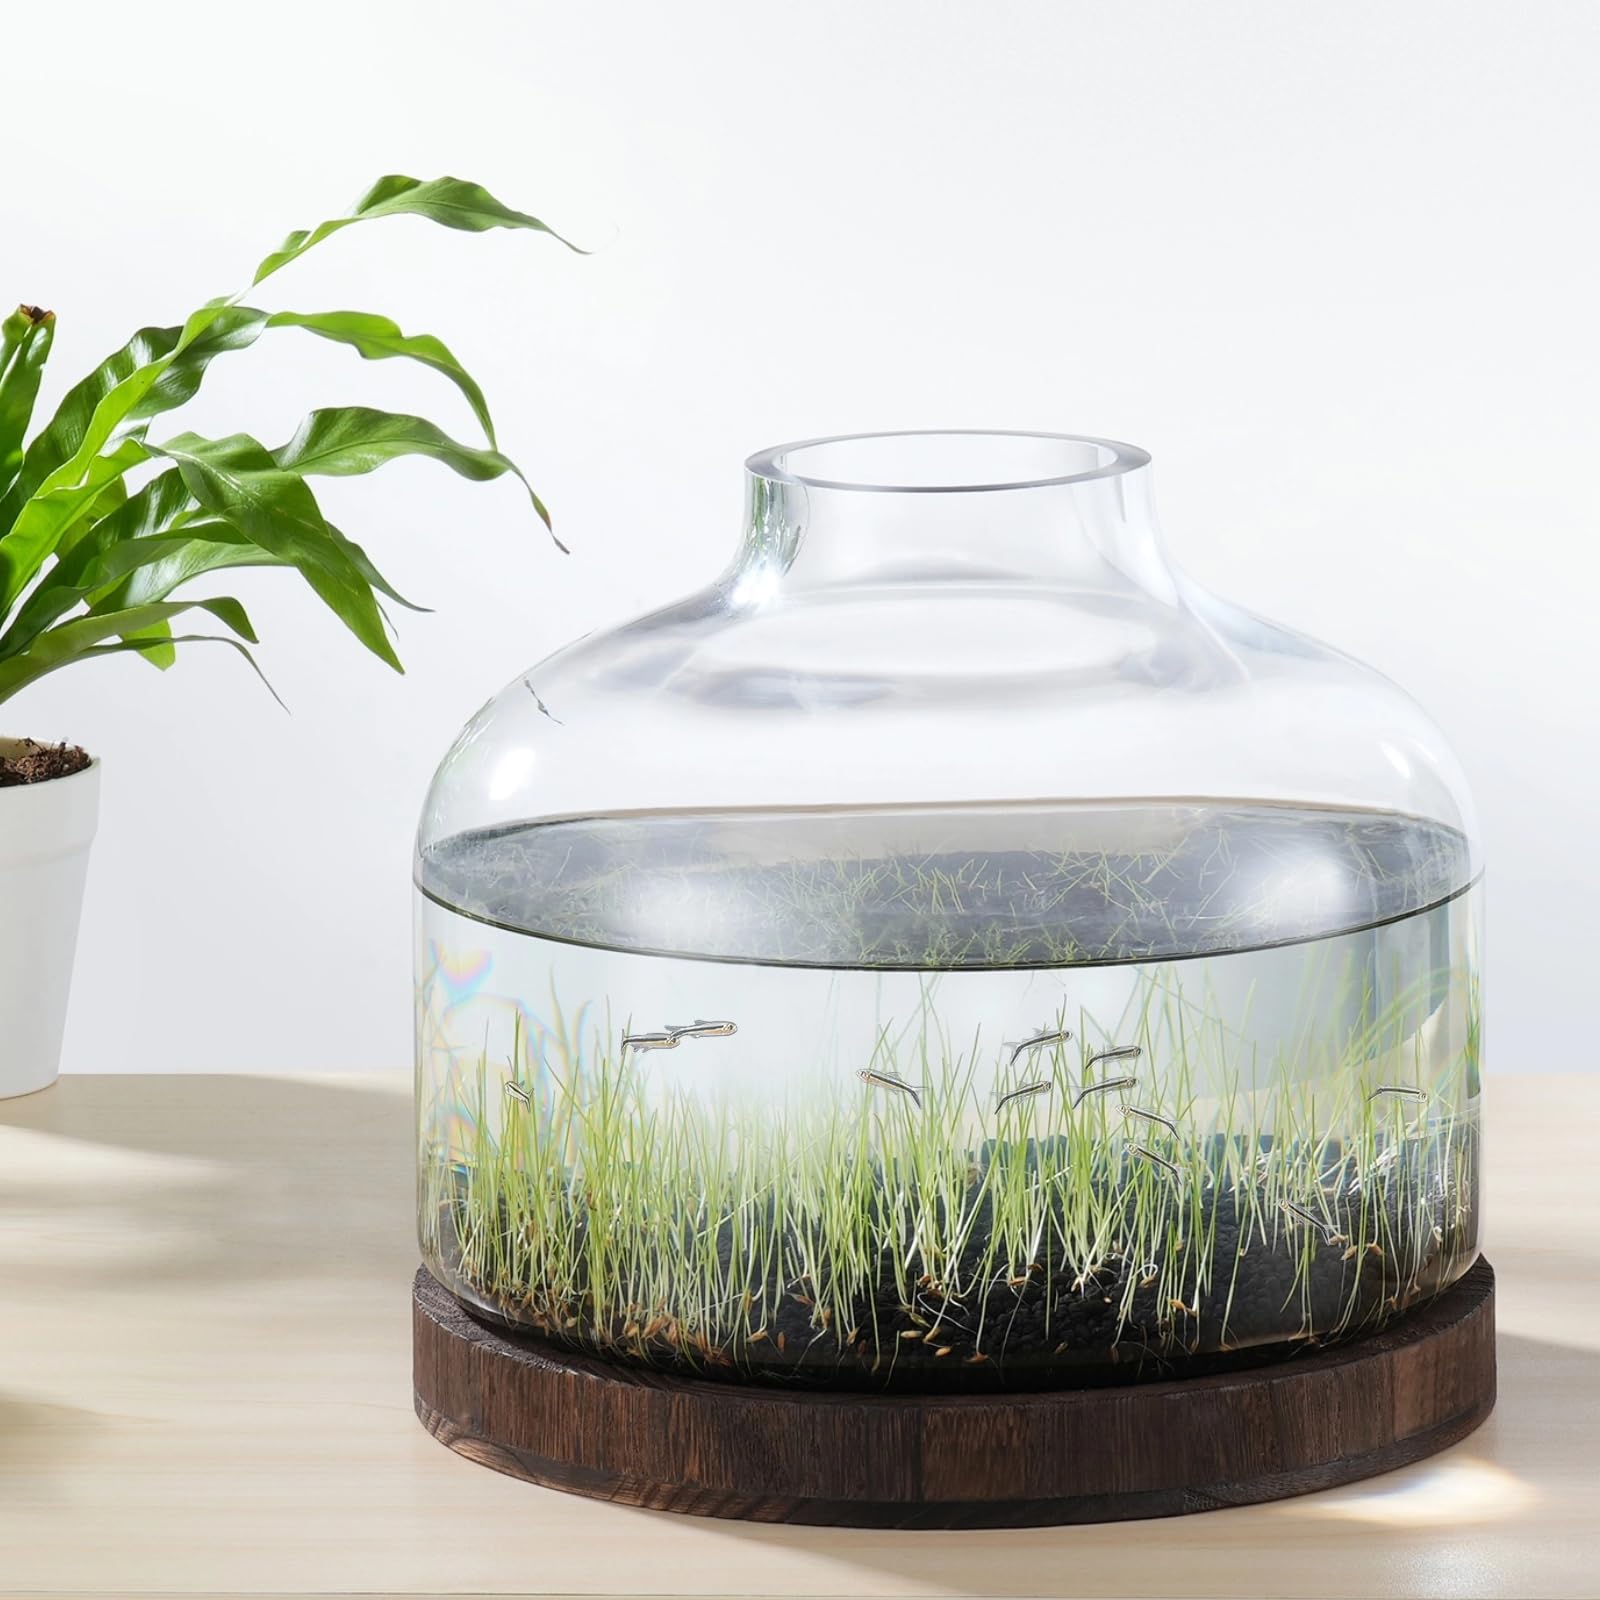 PONDON 2 Gallon Fish Bowl Vase: Trendy Aquarium Kit with Extras